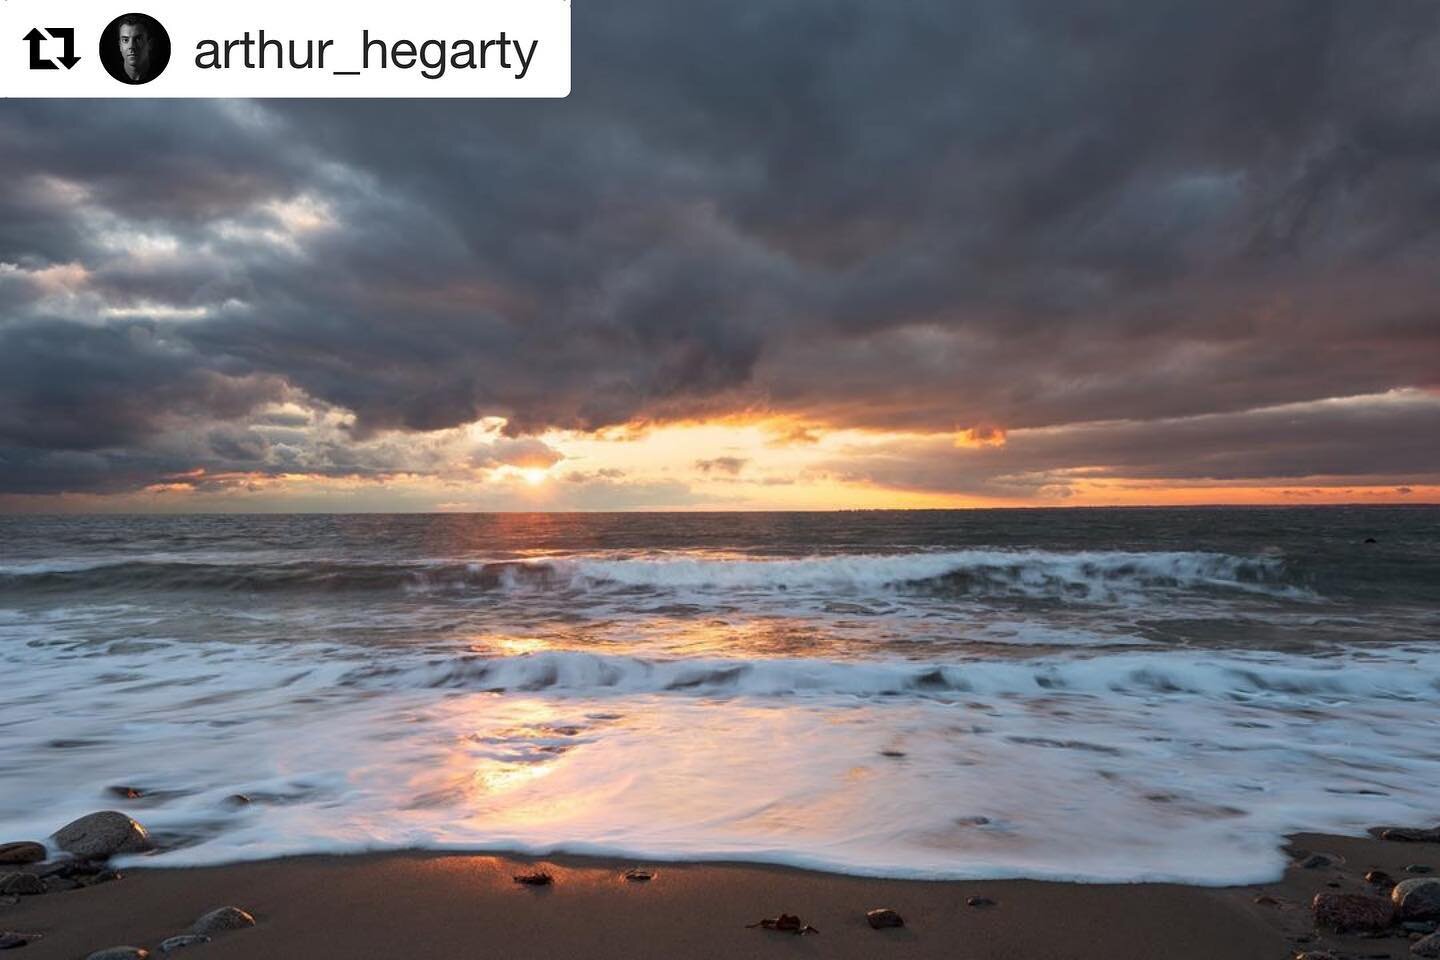 We always love a good sunset!! #Repost @arthur_hegarty ・・・
High tide or Yuletide? .
.
.
#photooftheday #seaside #seascape #cloudporn #westport #westportma #gooseberry #gooseberryisland #instagram #instagood #winter #beach #beachlife #sunset #canon #c